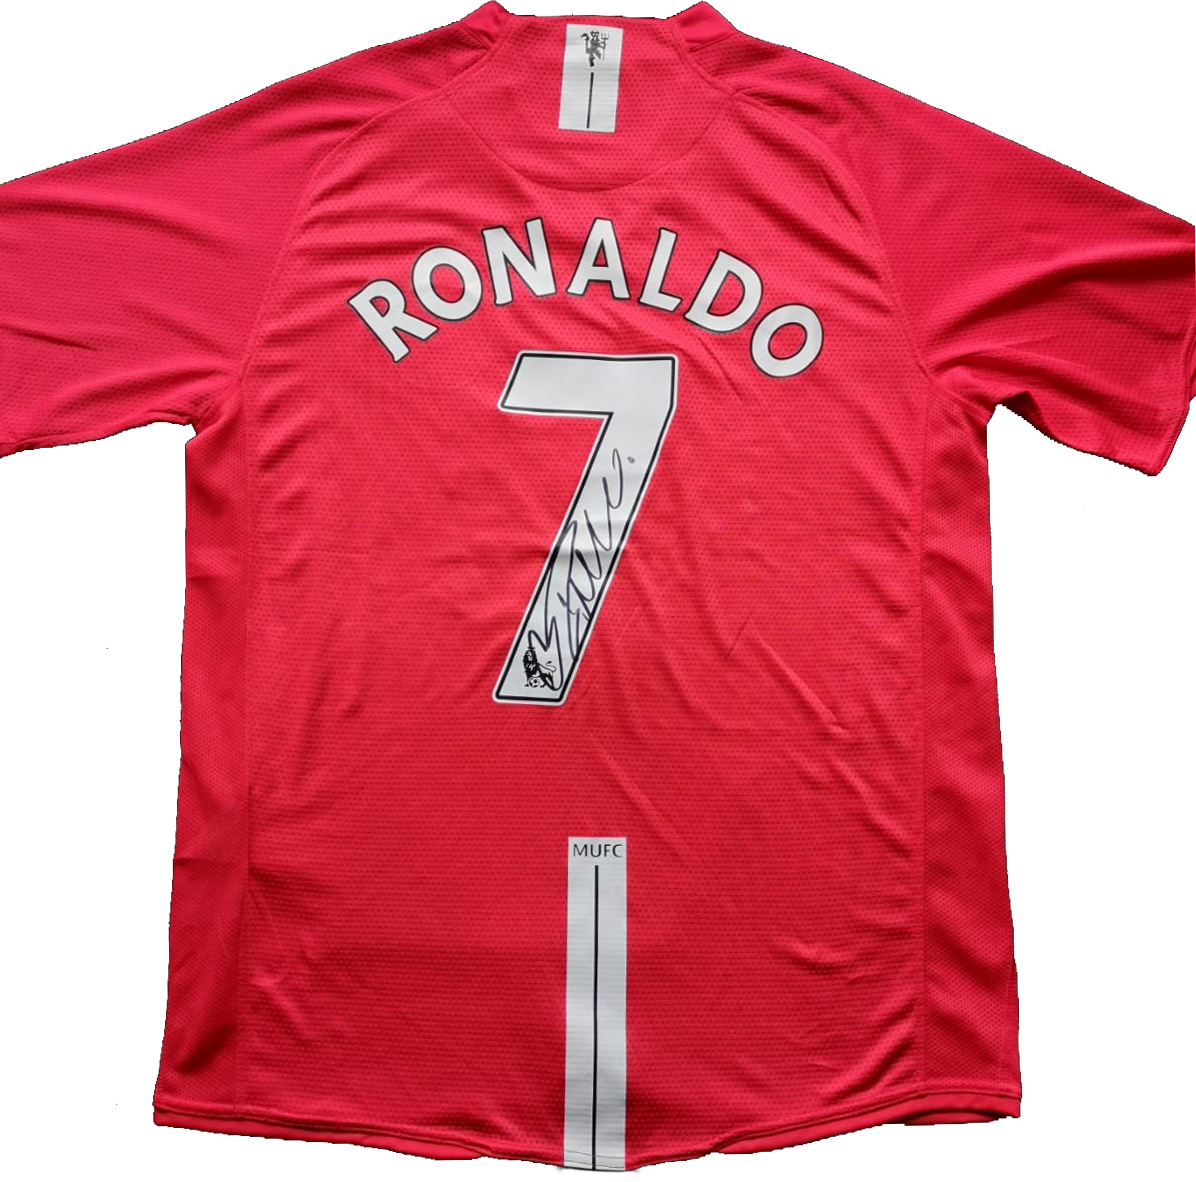 ronaldo manchester united jersey